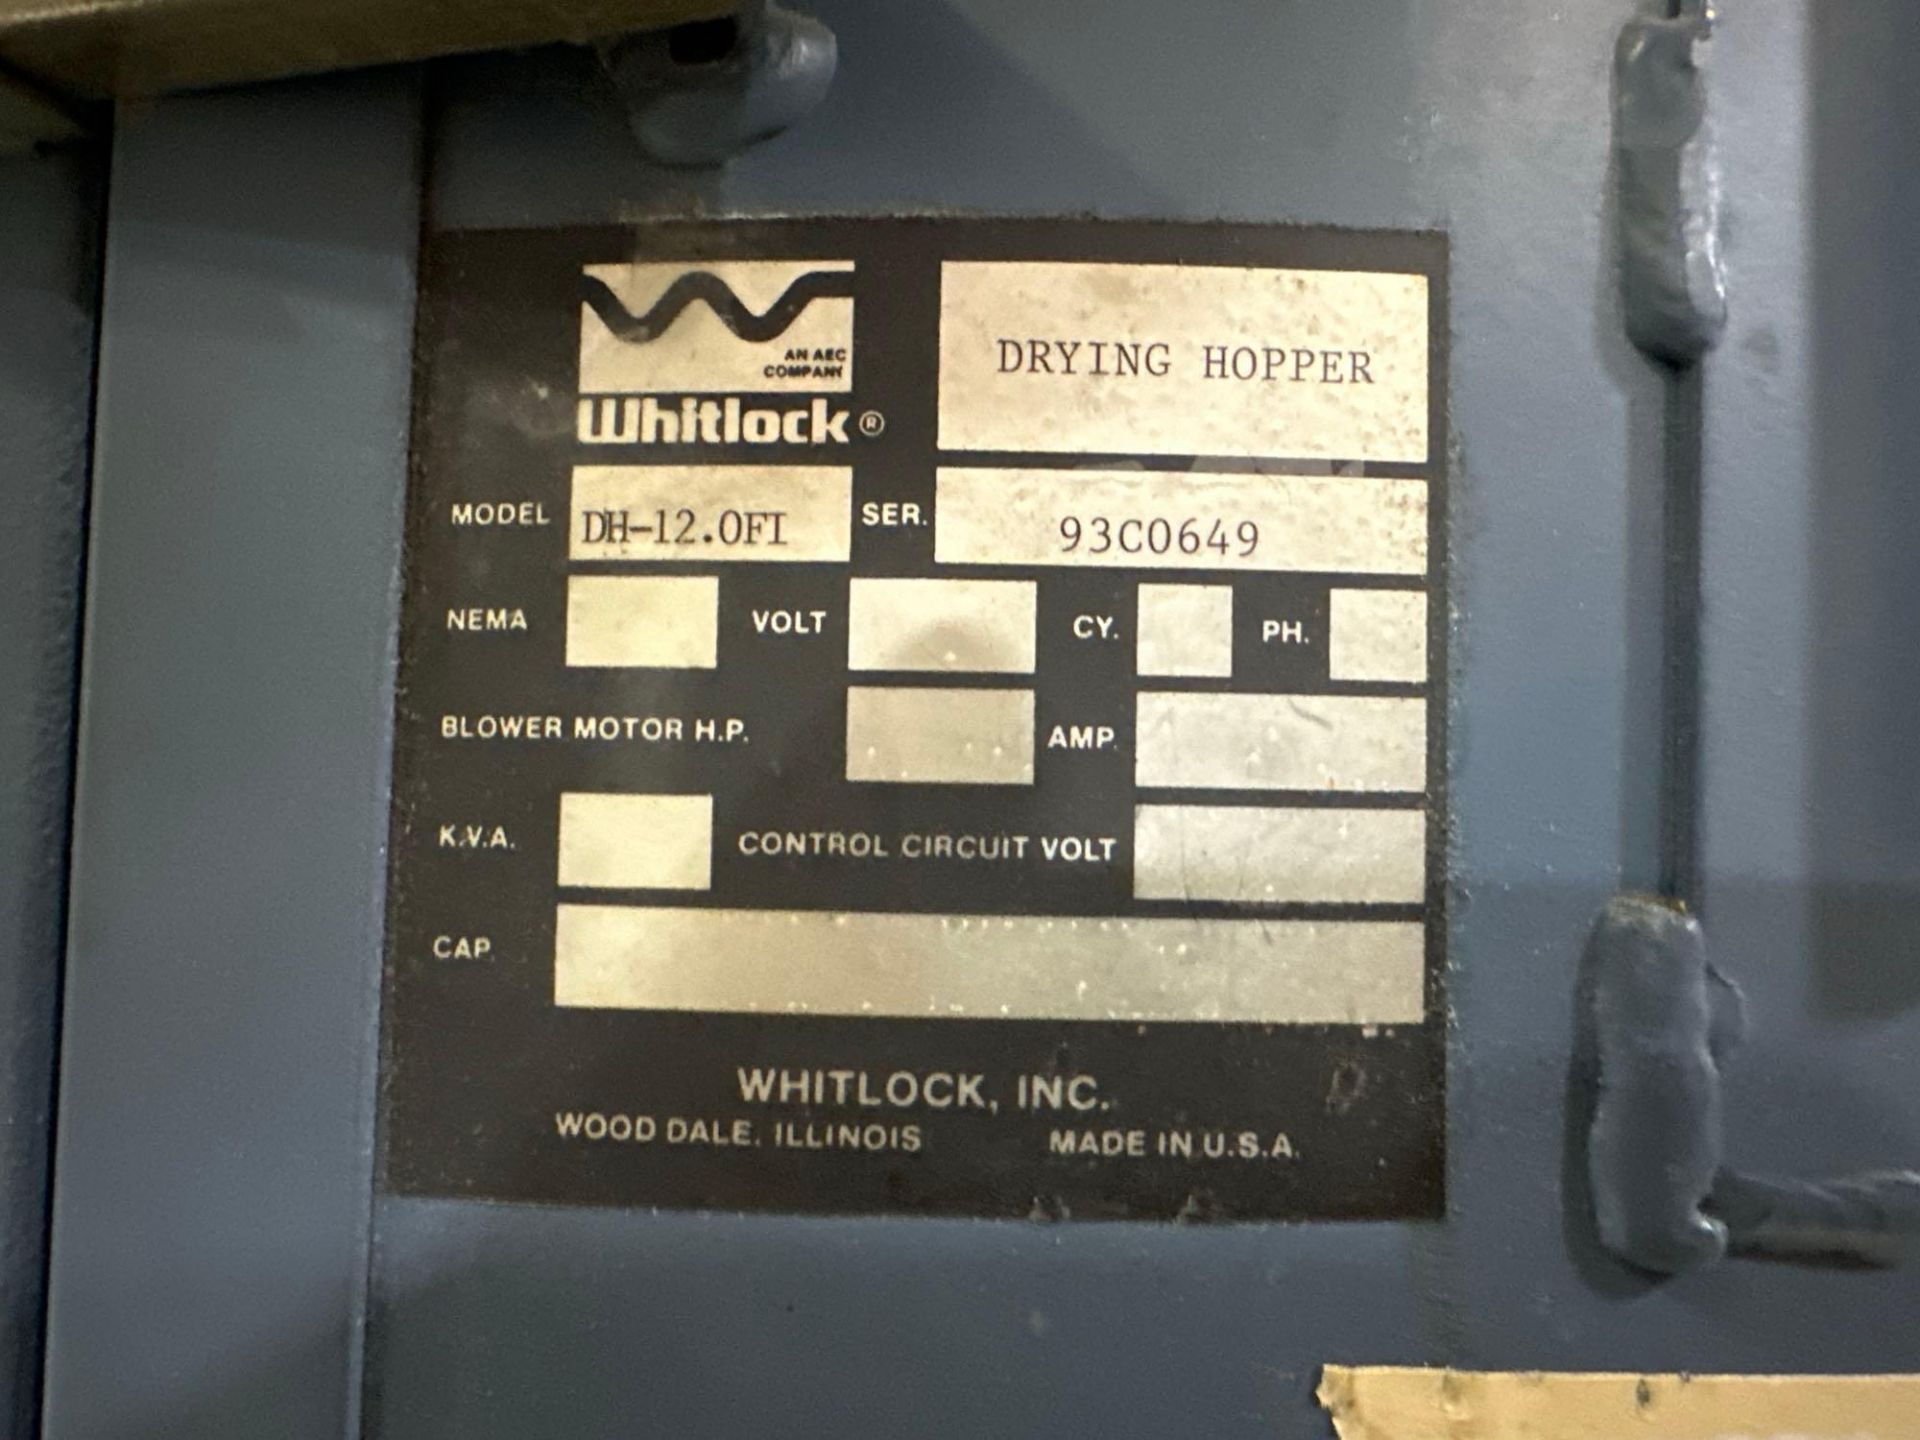 AEC Whitlock DH-12.OFI Drying Hopper, s/n 93c0659 - Bild 6 aus 6